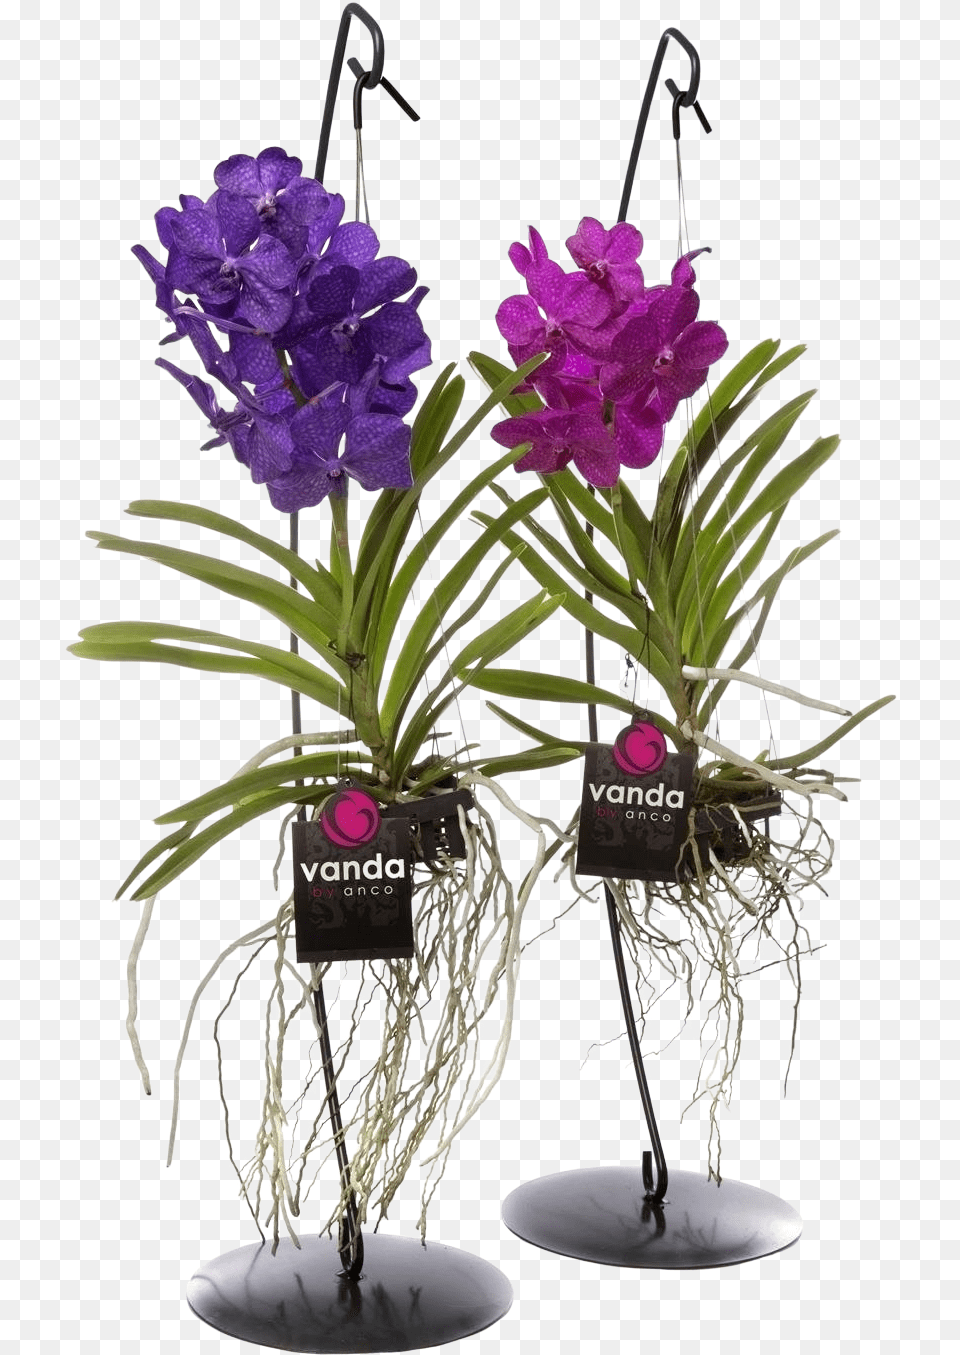 Vanda With Standard Vanda Orchidee, Flower, Flower Arrangement, Plant, Petal Png